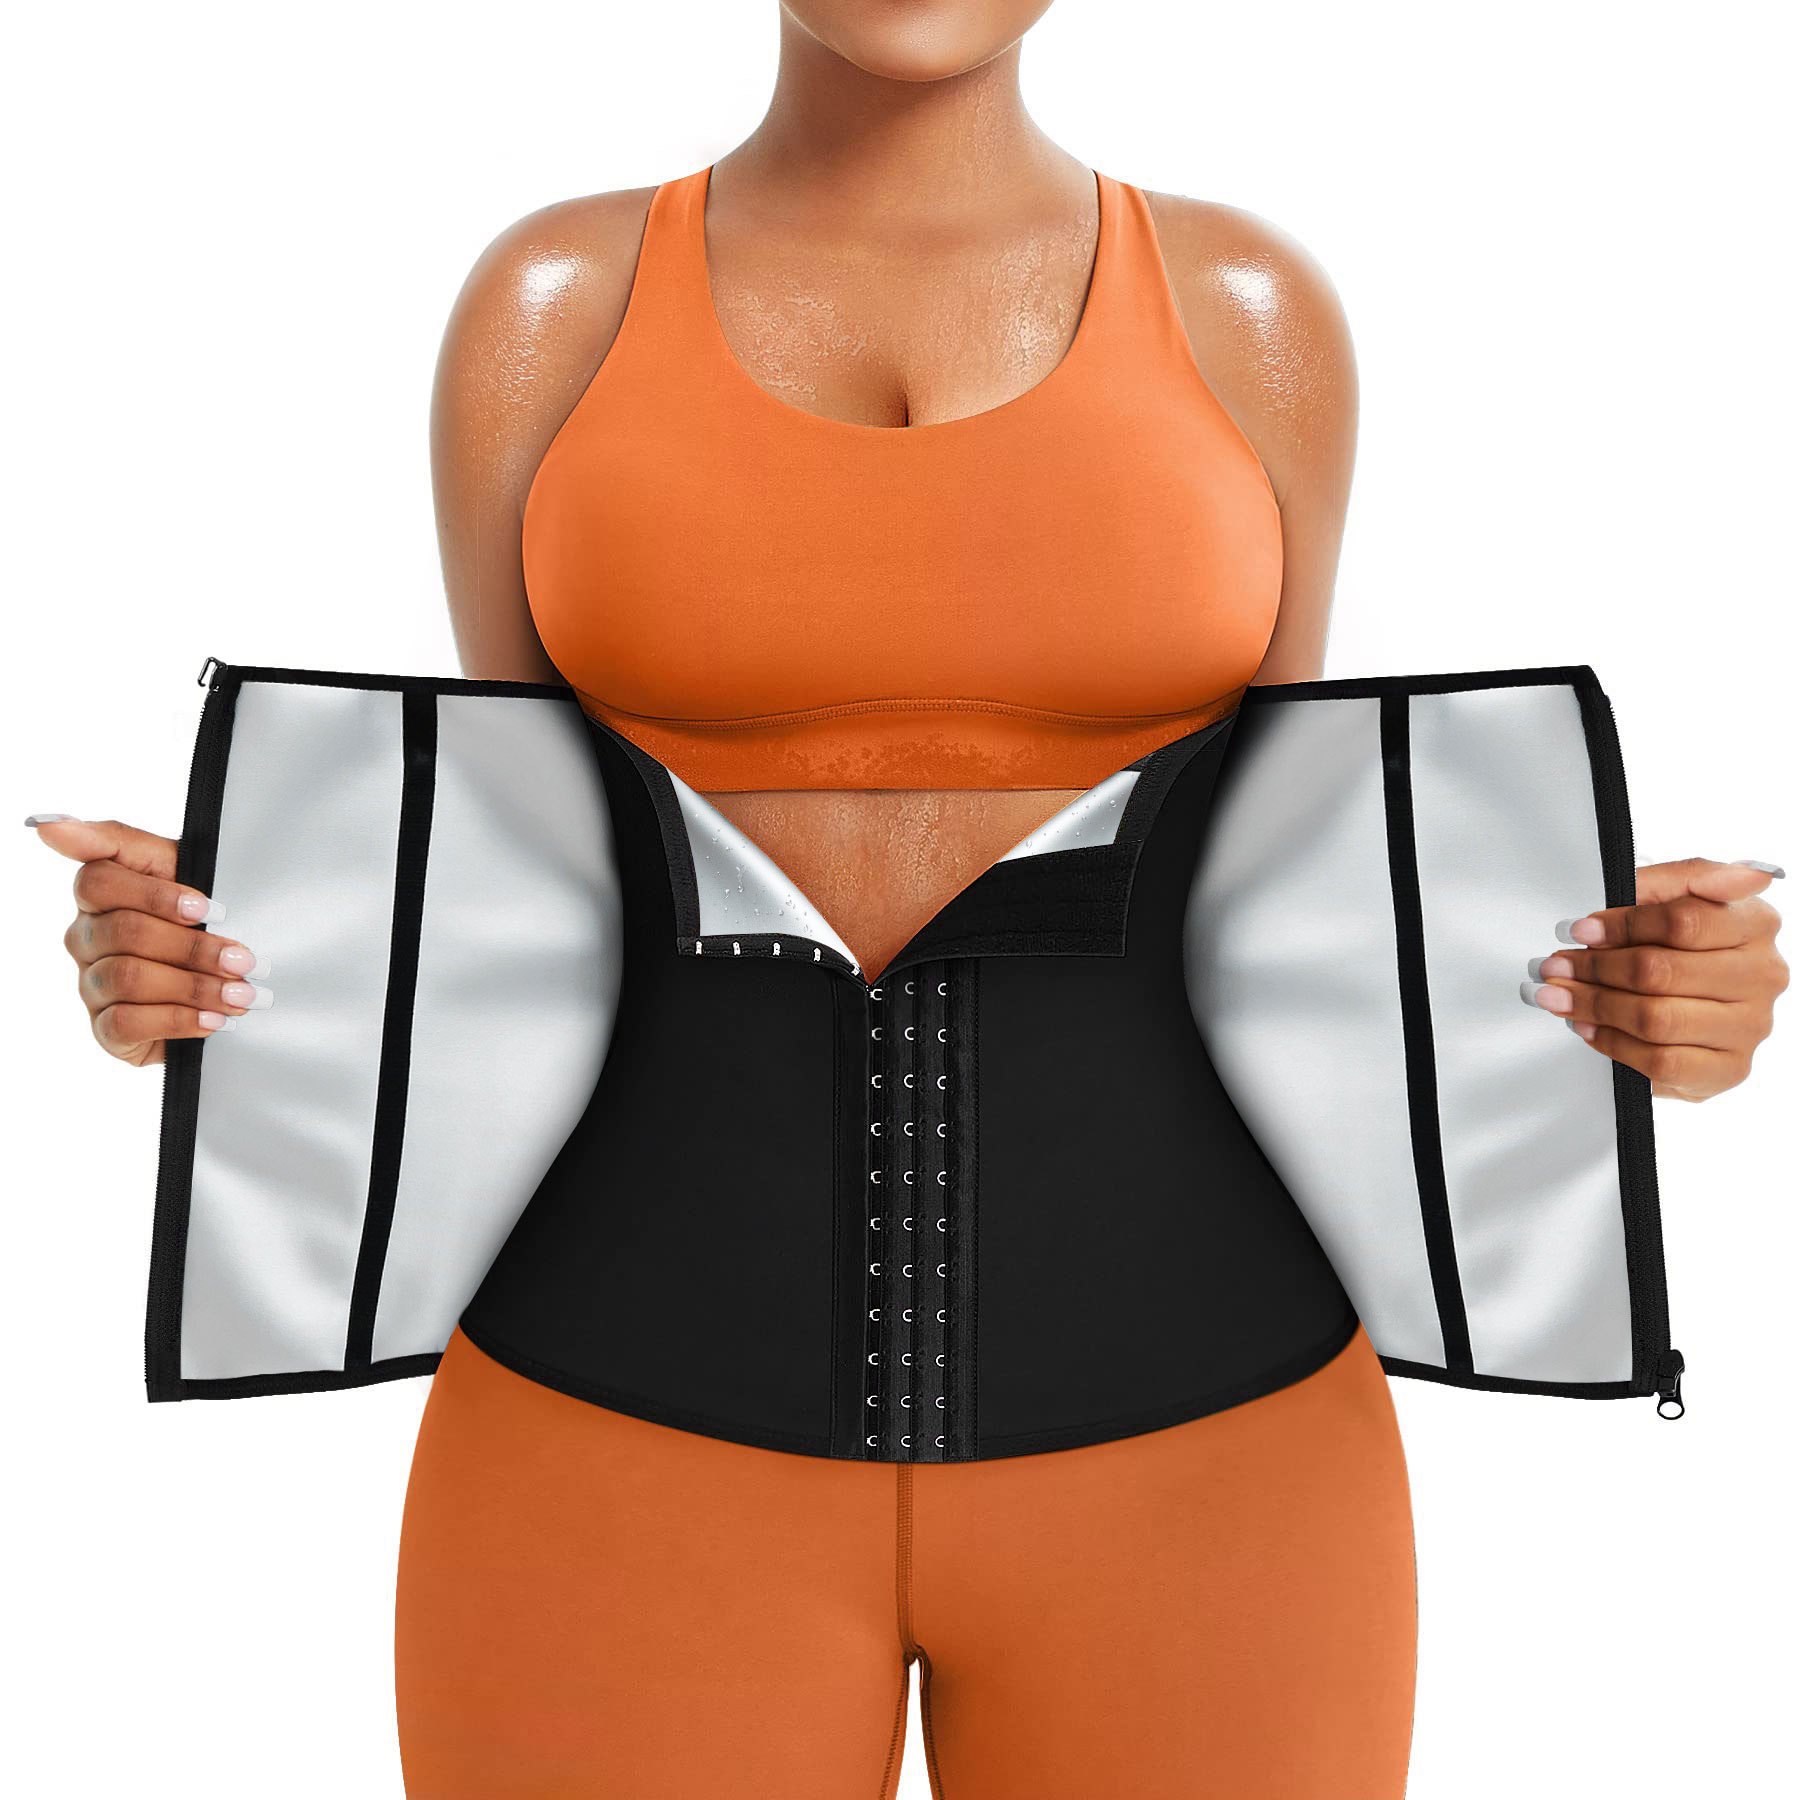 Gotoly Women Waist Trainer Corset Cincher Belt Tummy Control